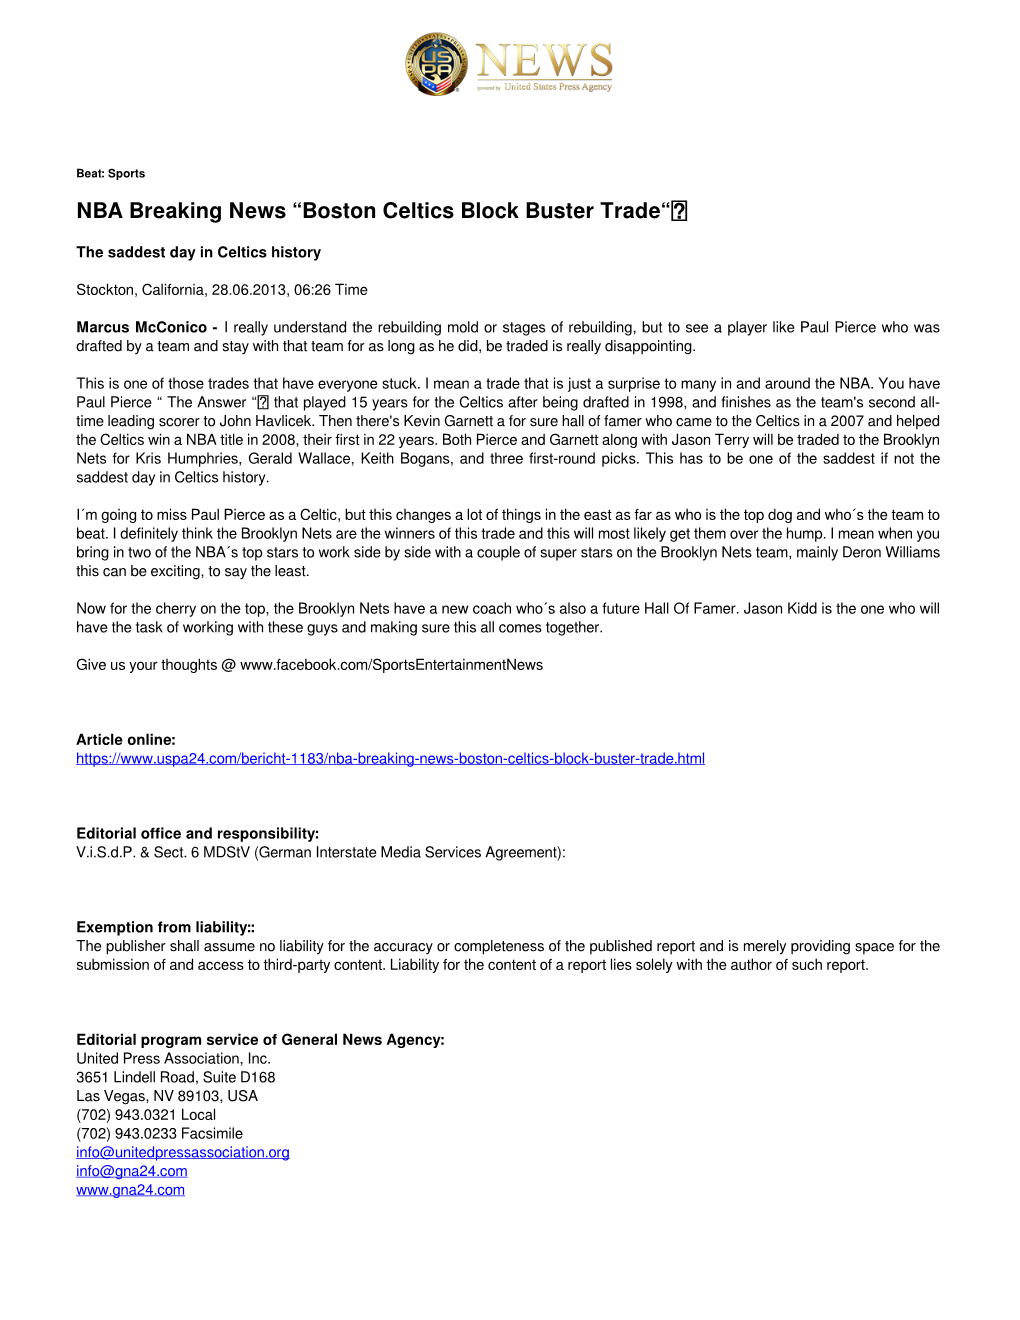 NBA Breaking News “Boston Celtics Block Buster Trade“